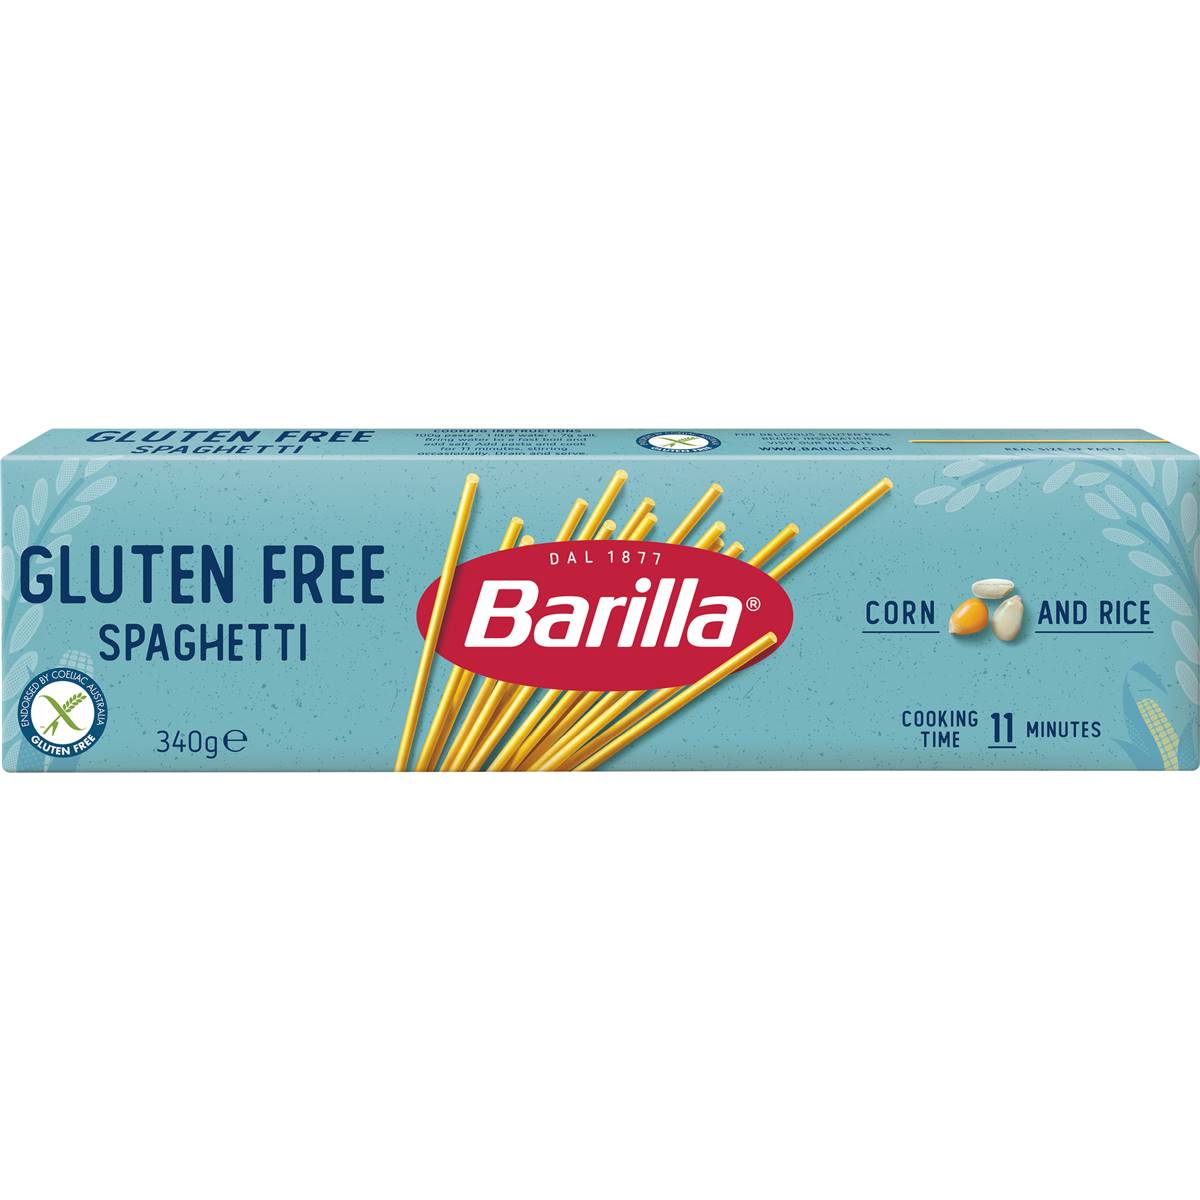 Calories in Barilla Pasta Gluten Free Spaghetti Gluten Free